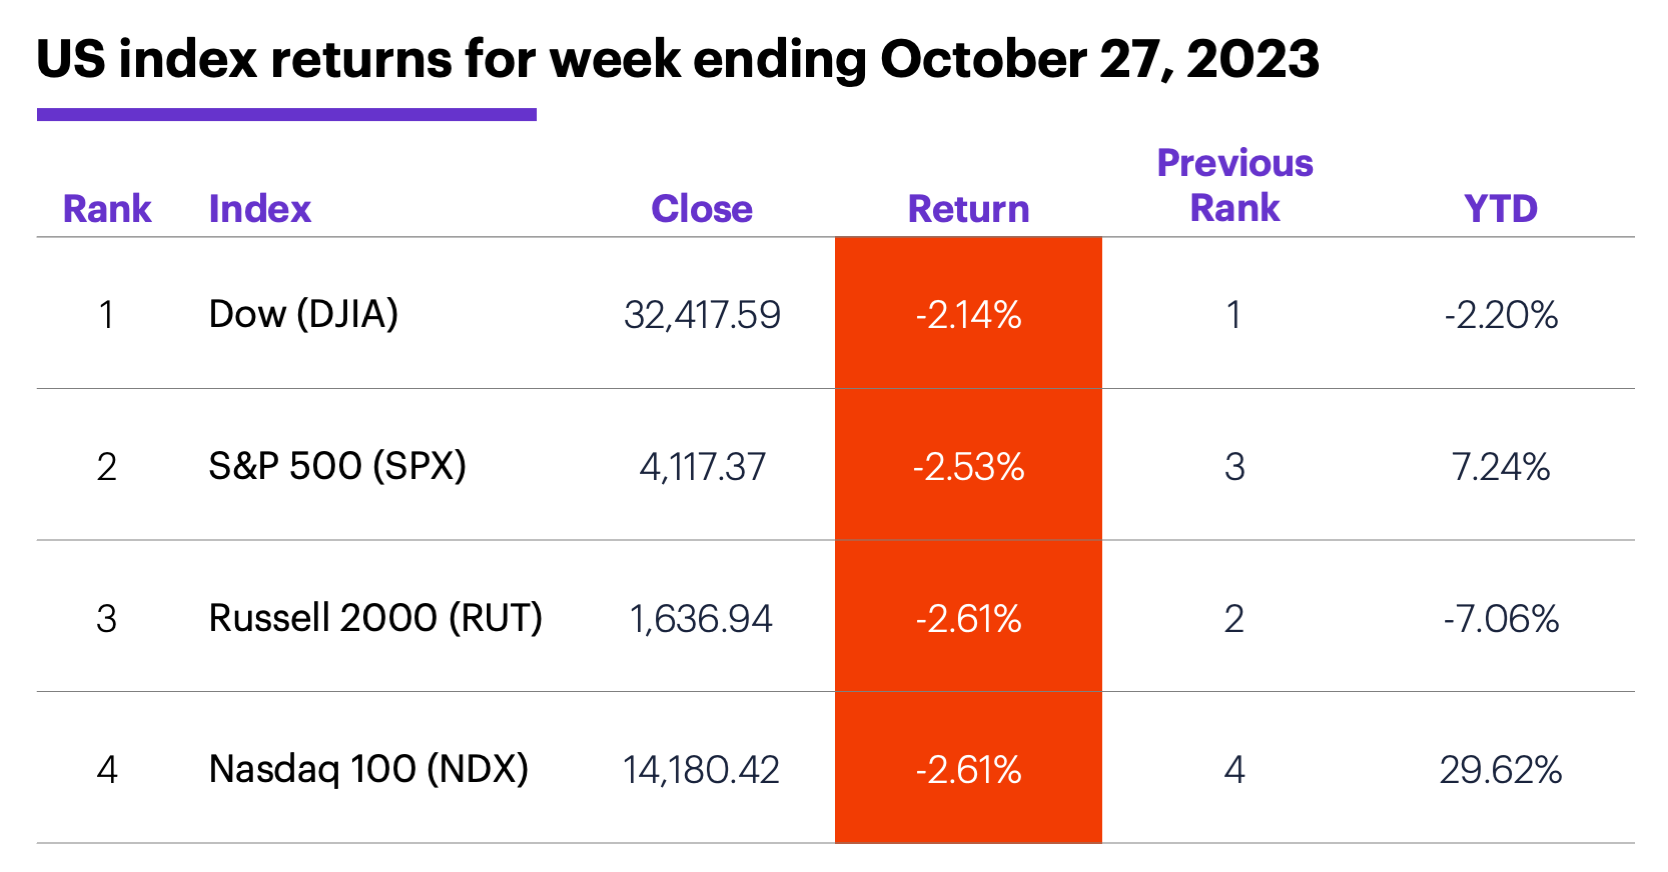 US stock index performance for week ending 10/27/23. S&P 500 (SPX), Nasdaq 100 (NDX), Russell 2000 (RUT), Dow Jones Industrial Average (DJIA).